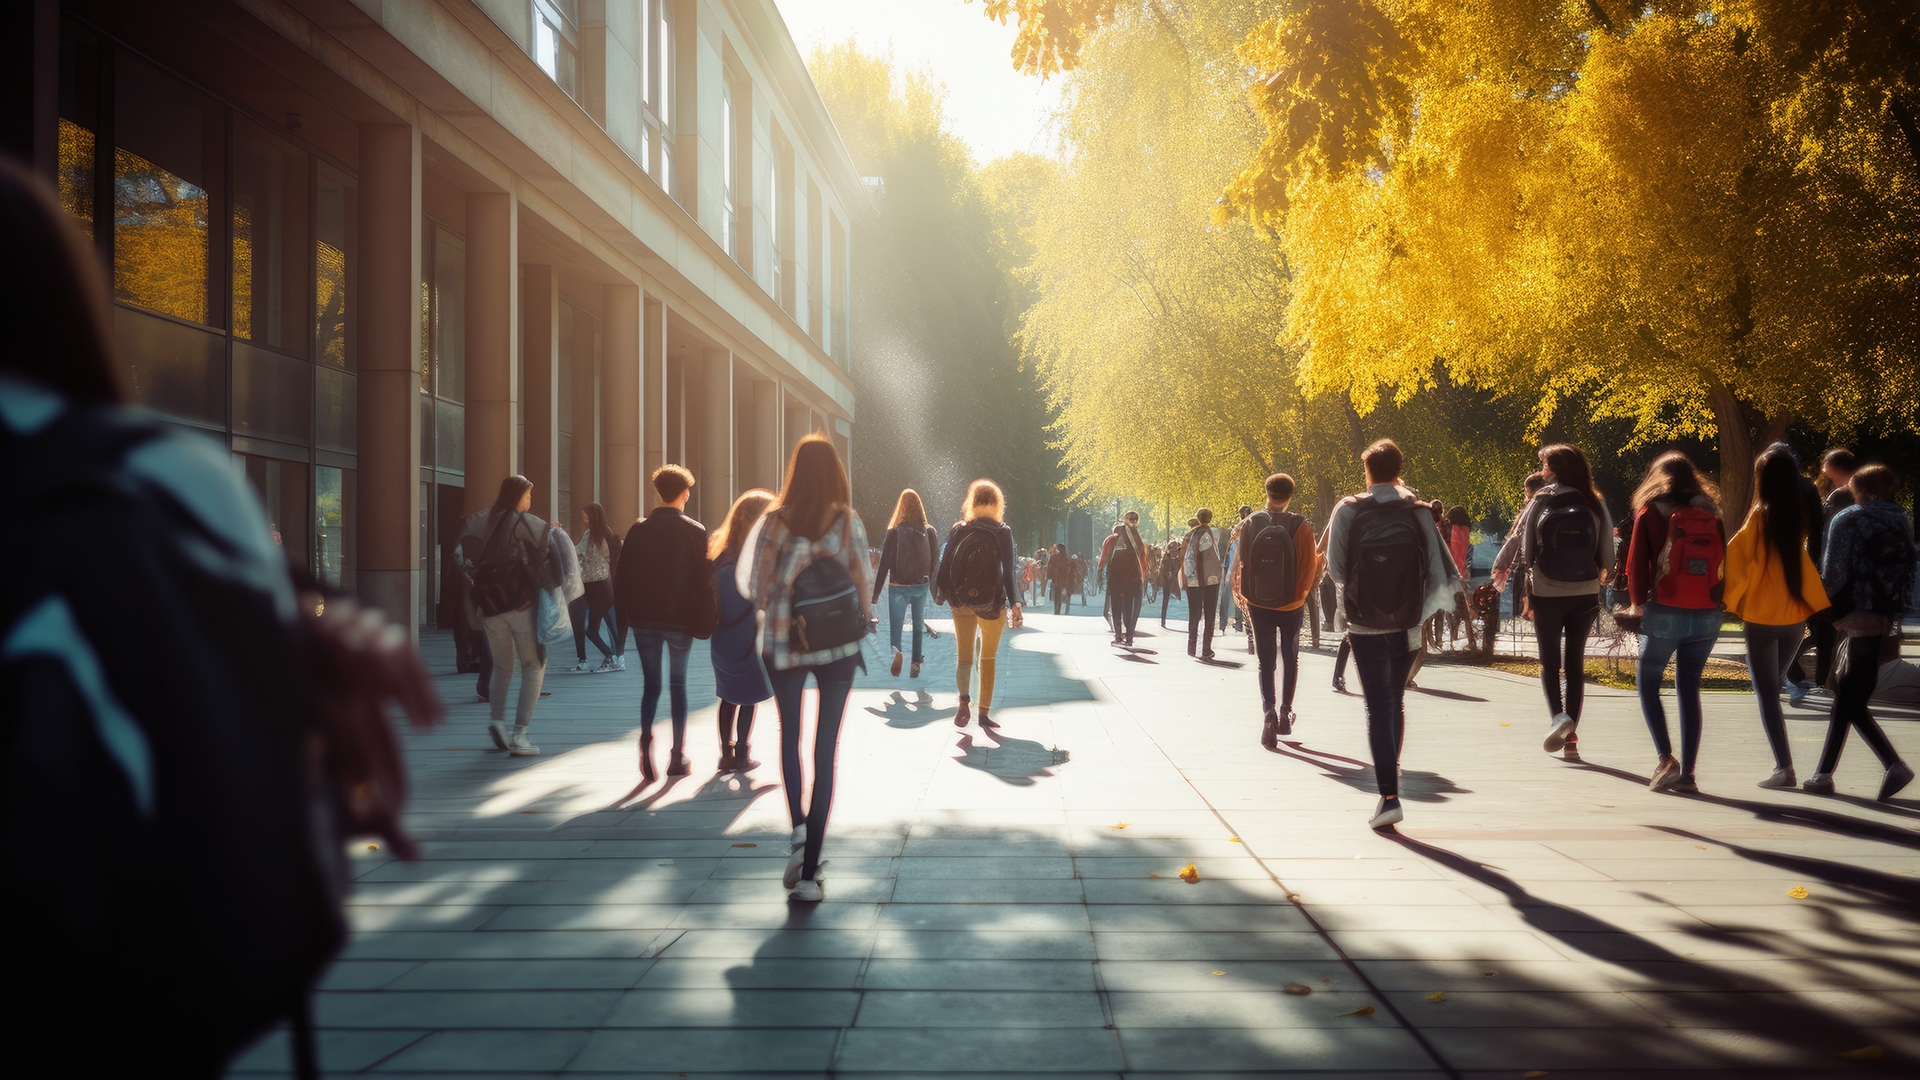 Image of people walking through a university campus